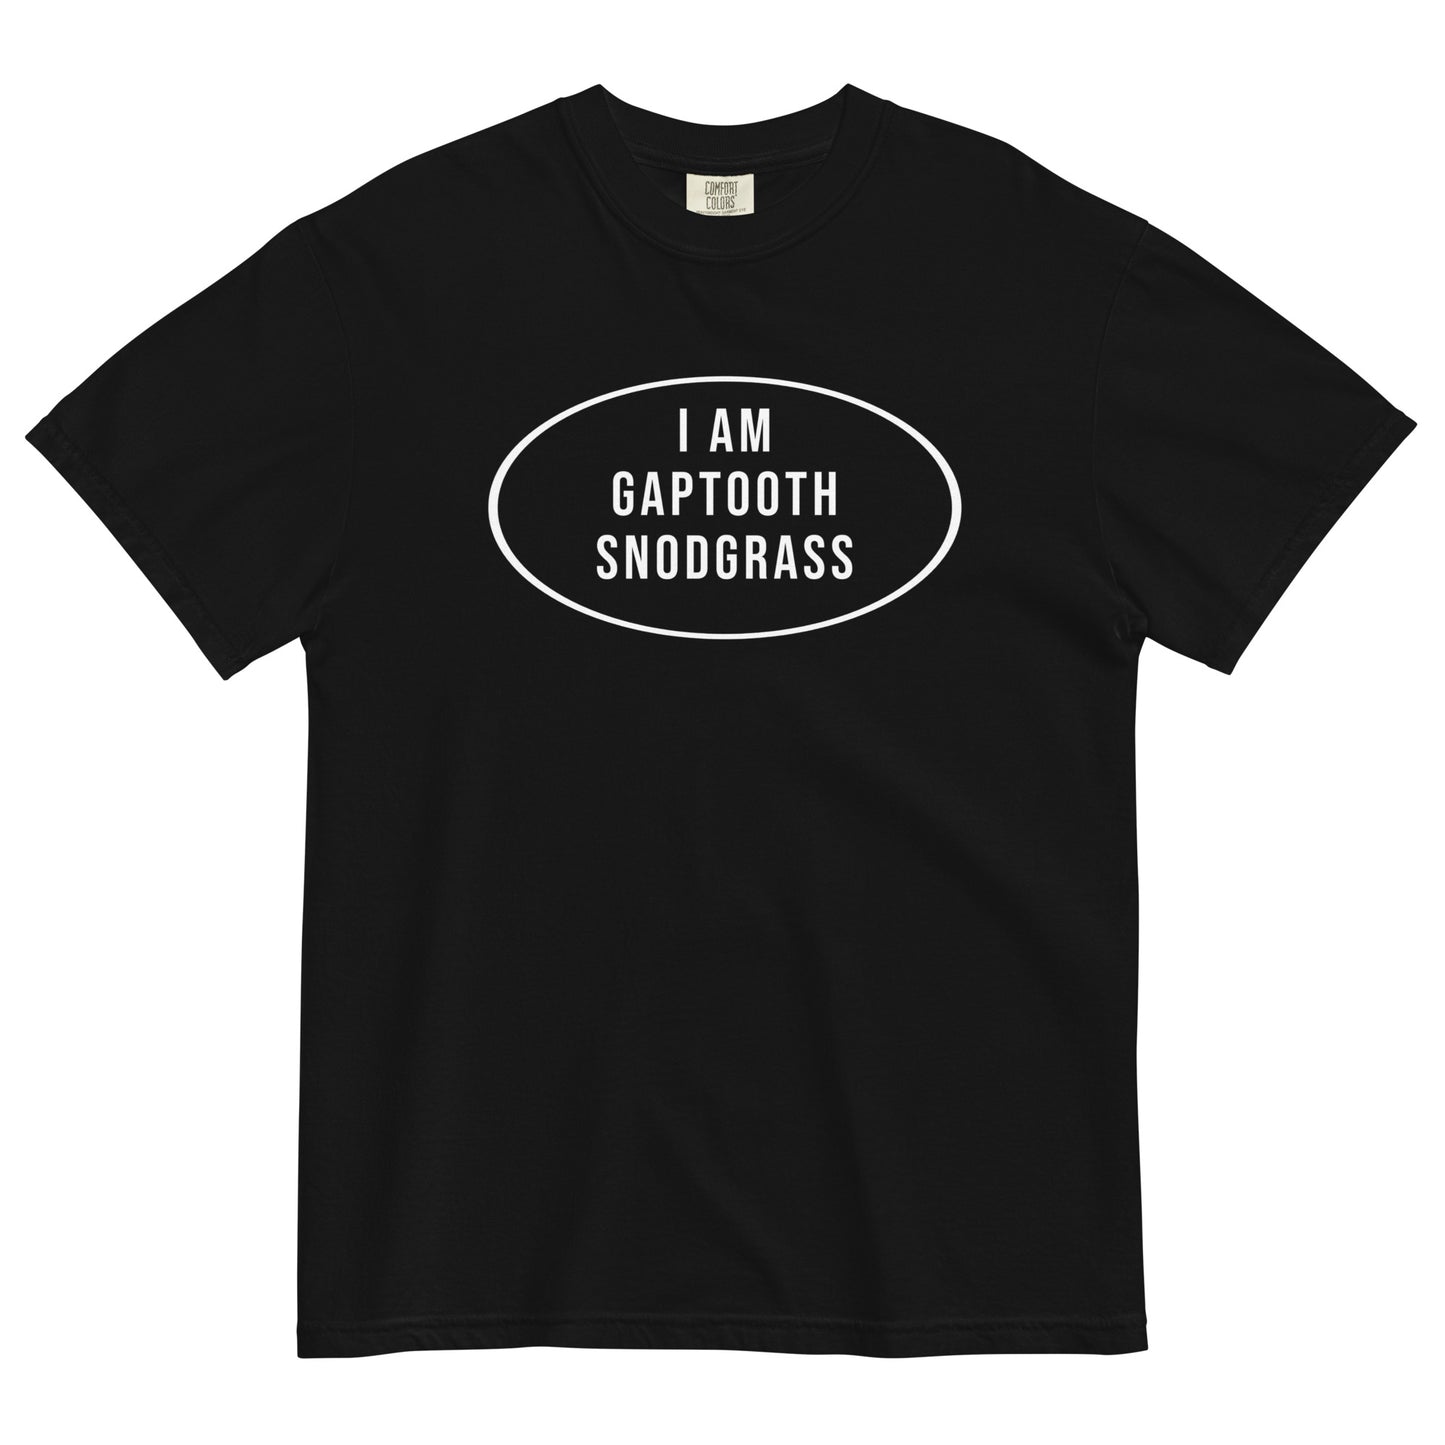 I AM GAPTOOTH SNODGRASS T-Shirt